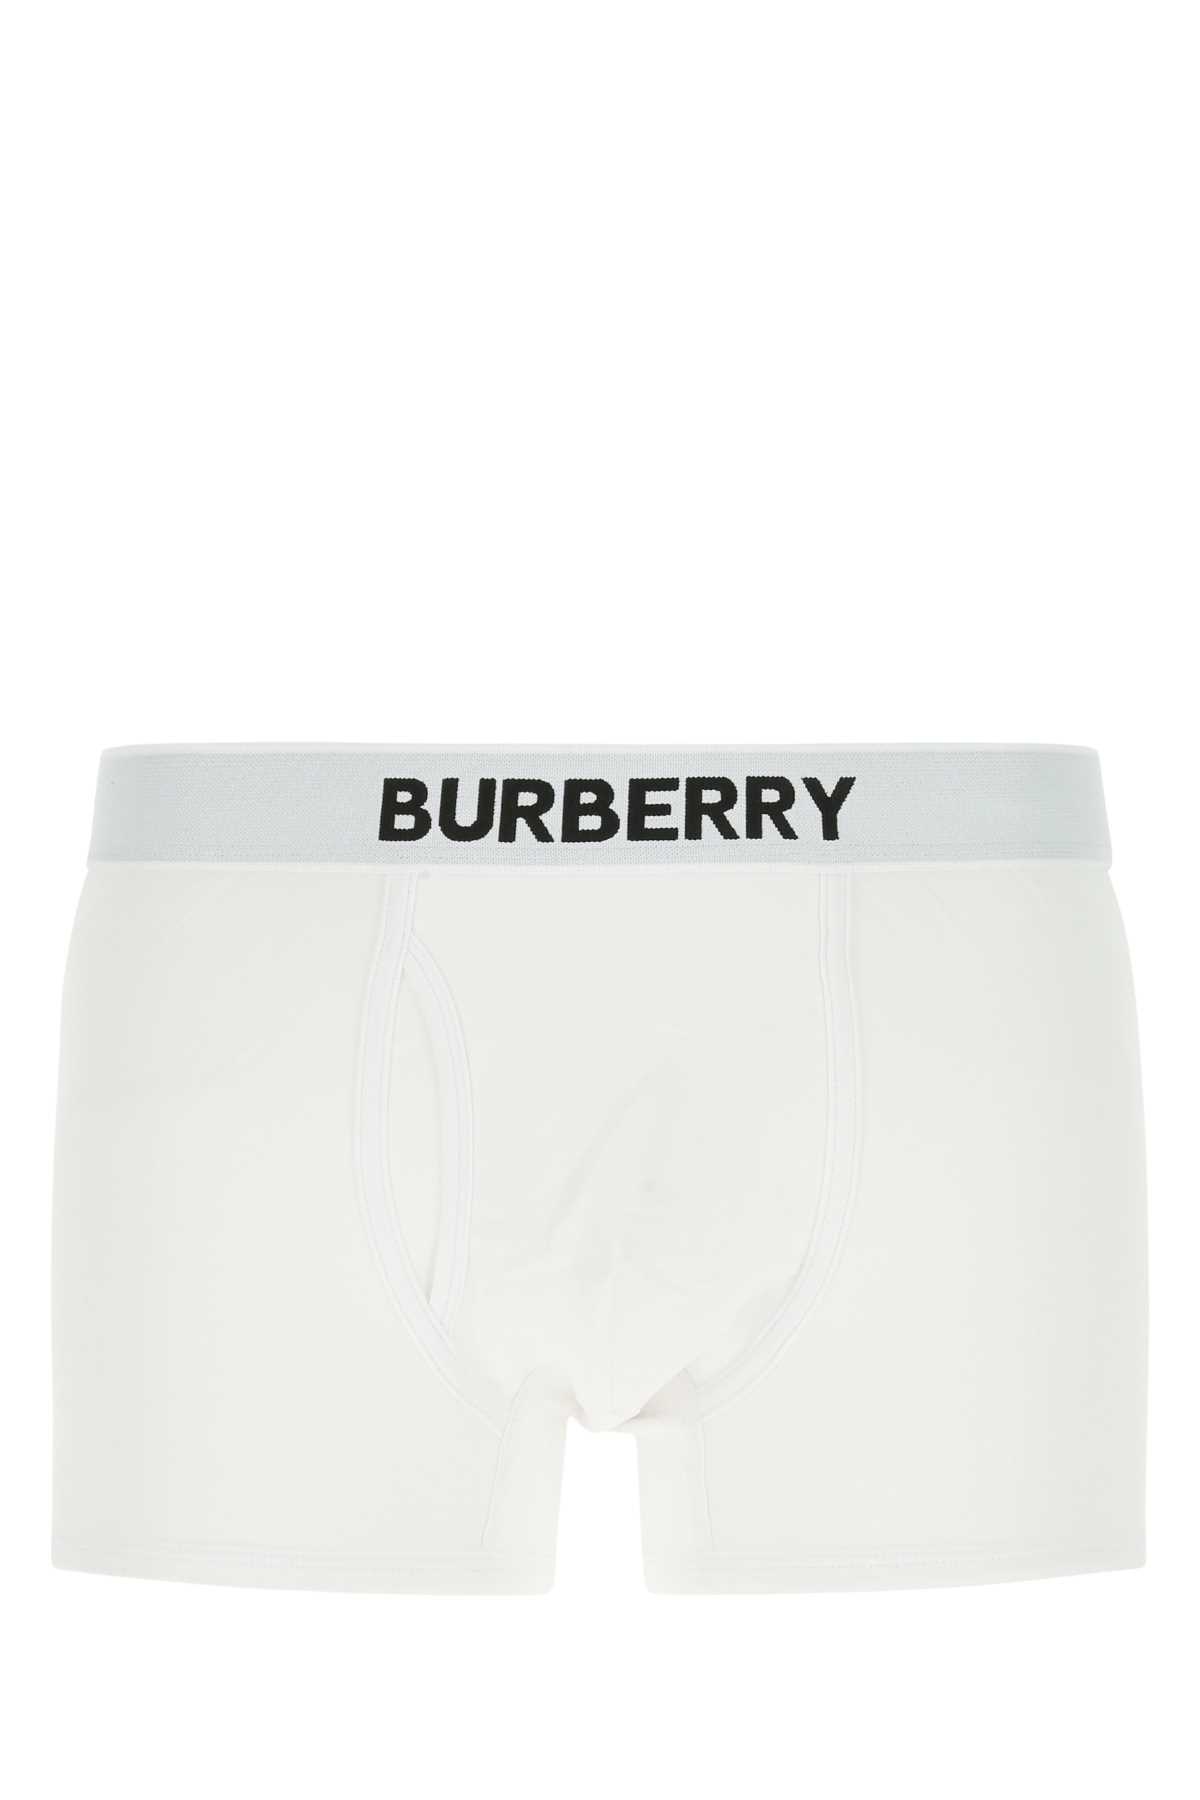 Burberry White Stretch Cotton Boxer